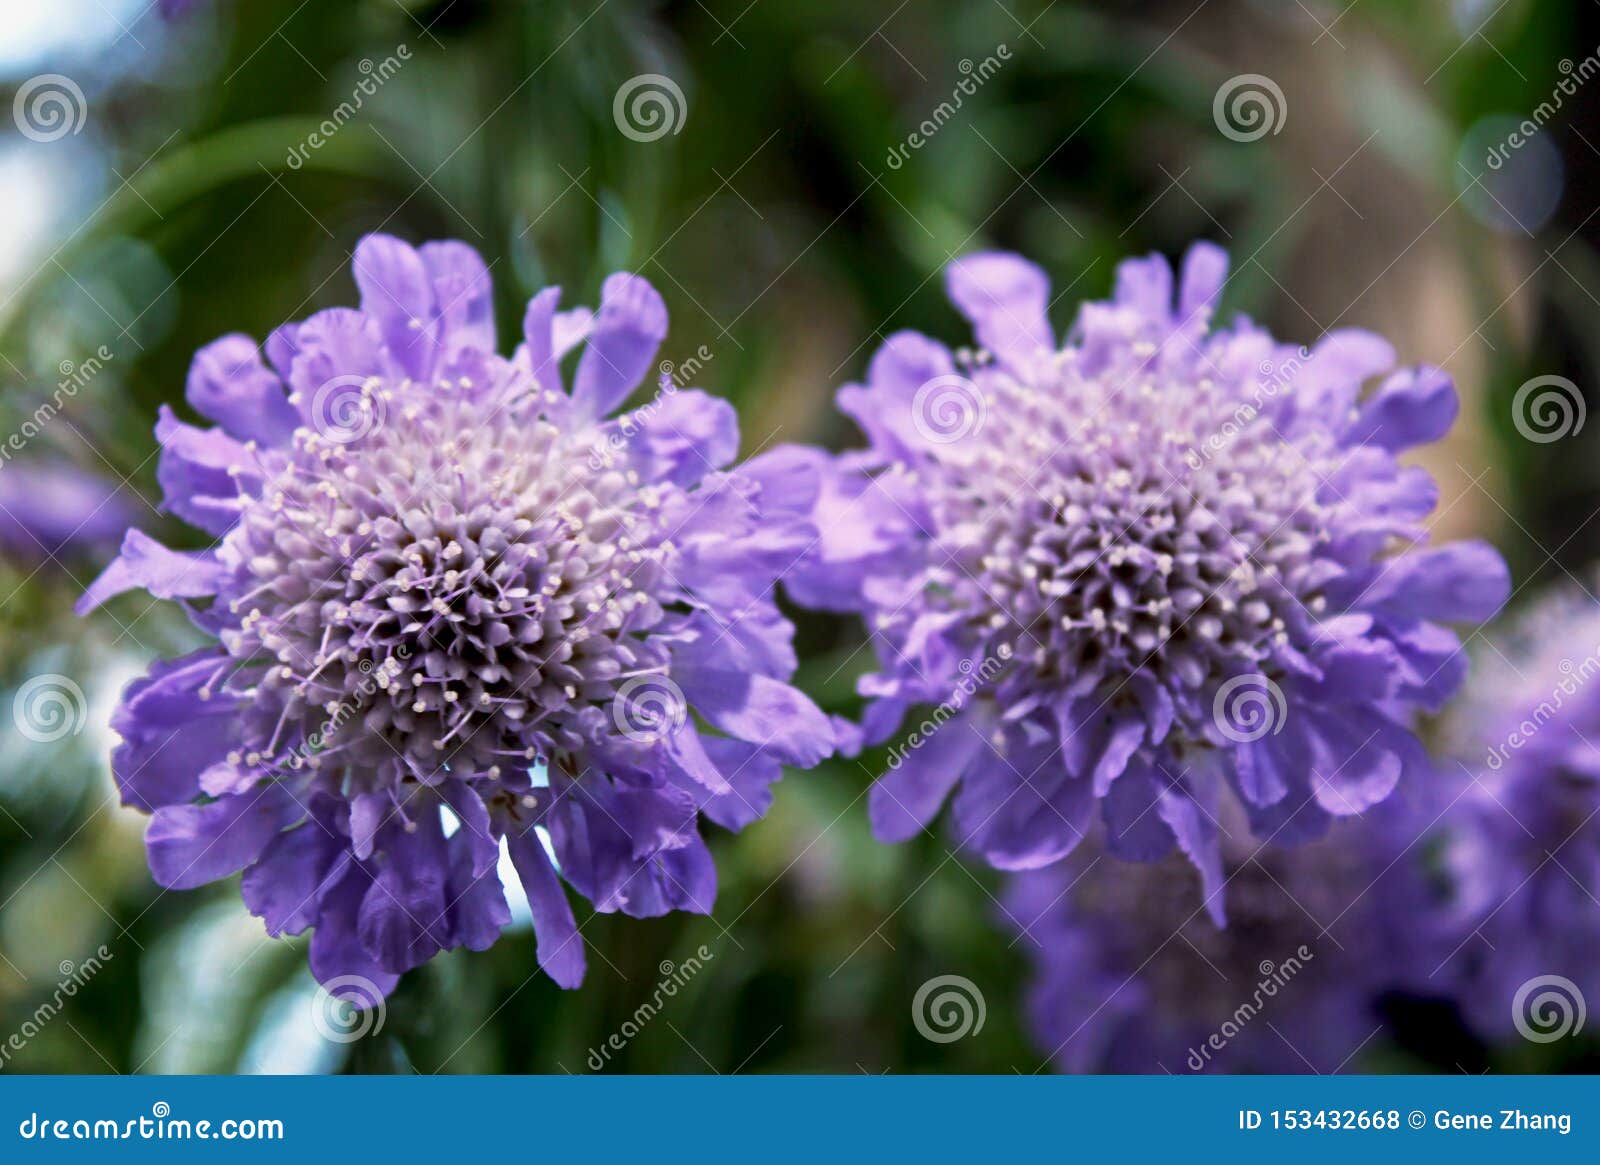 Butterfly Blue Pincushion Flowers Scabiosa Columbaria Stock Photo Image Of Sensation Medicine 153432668